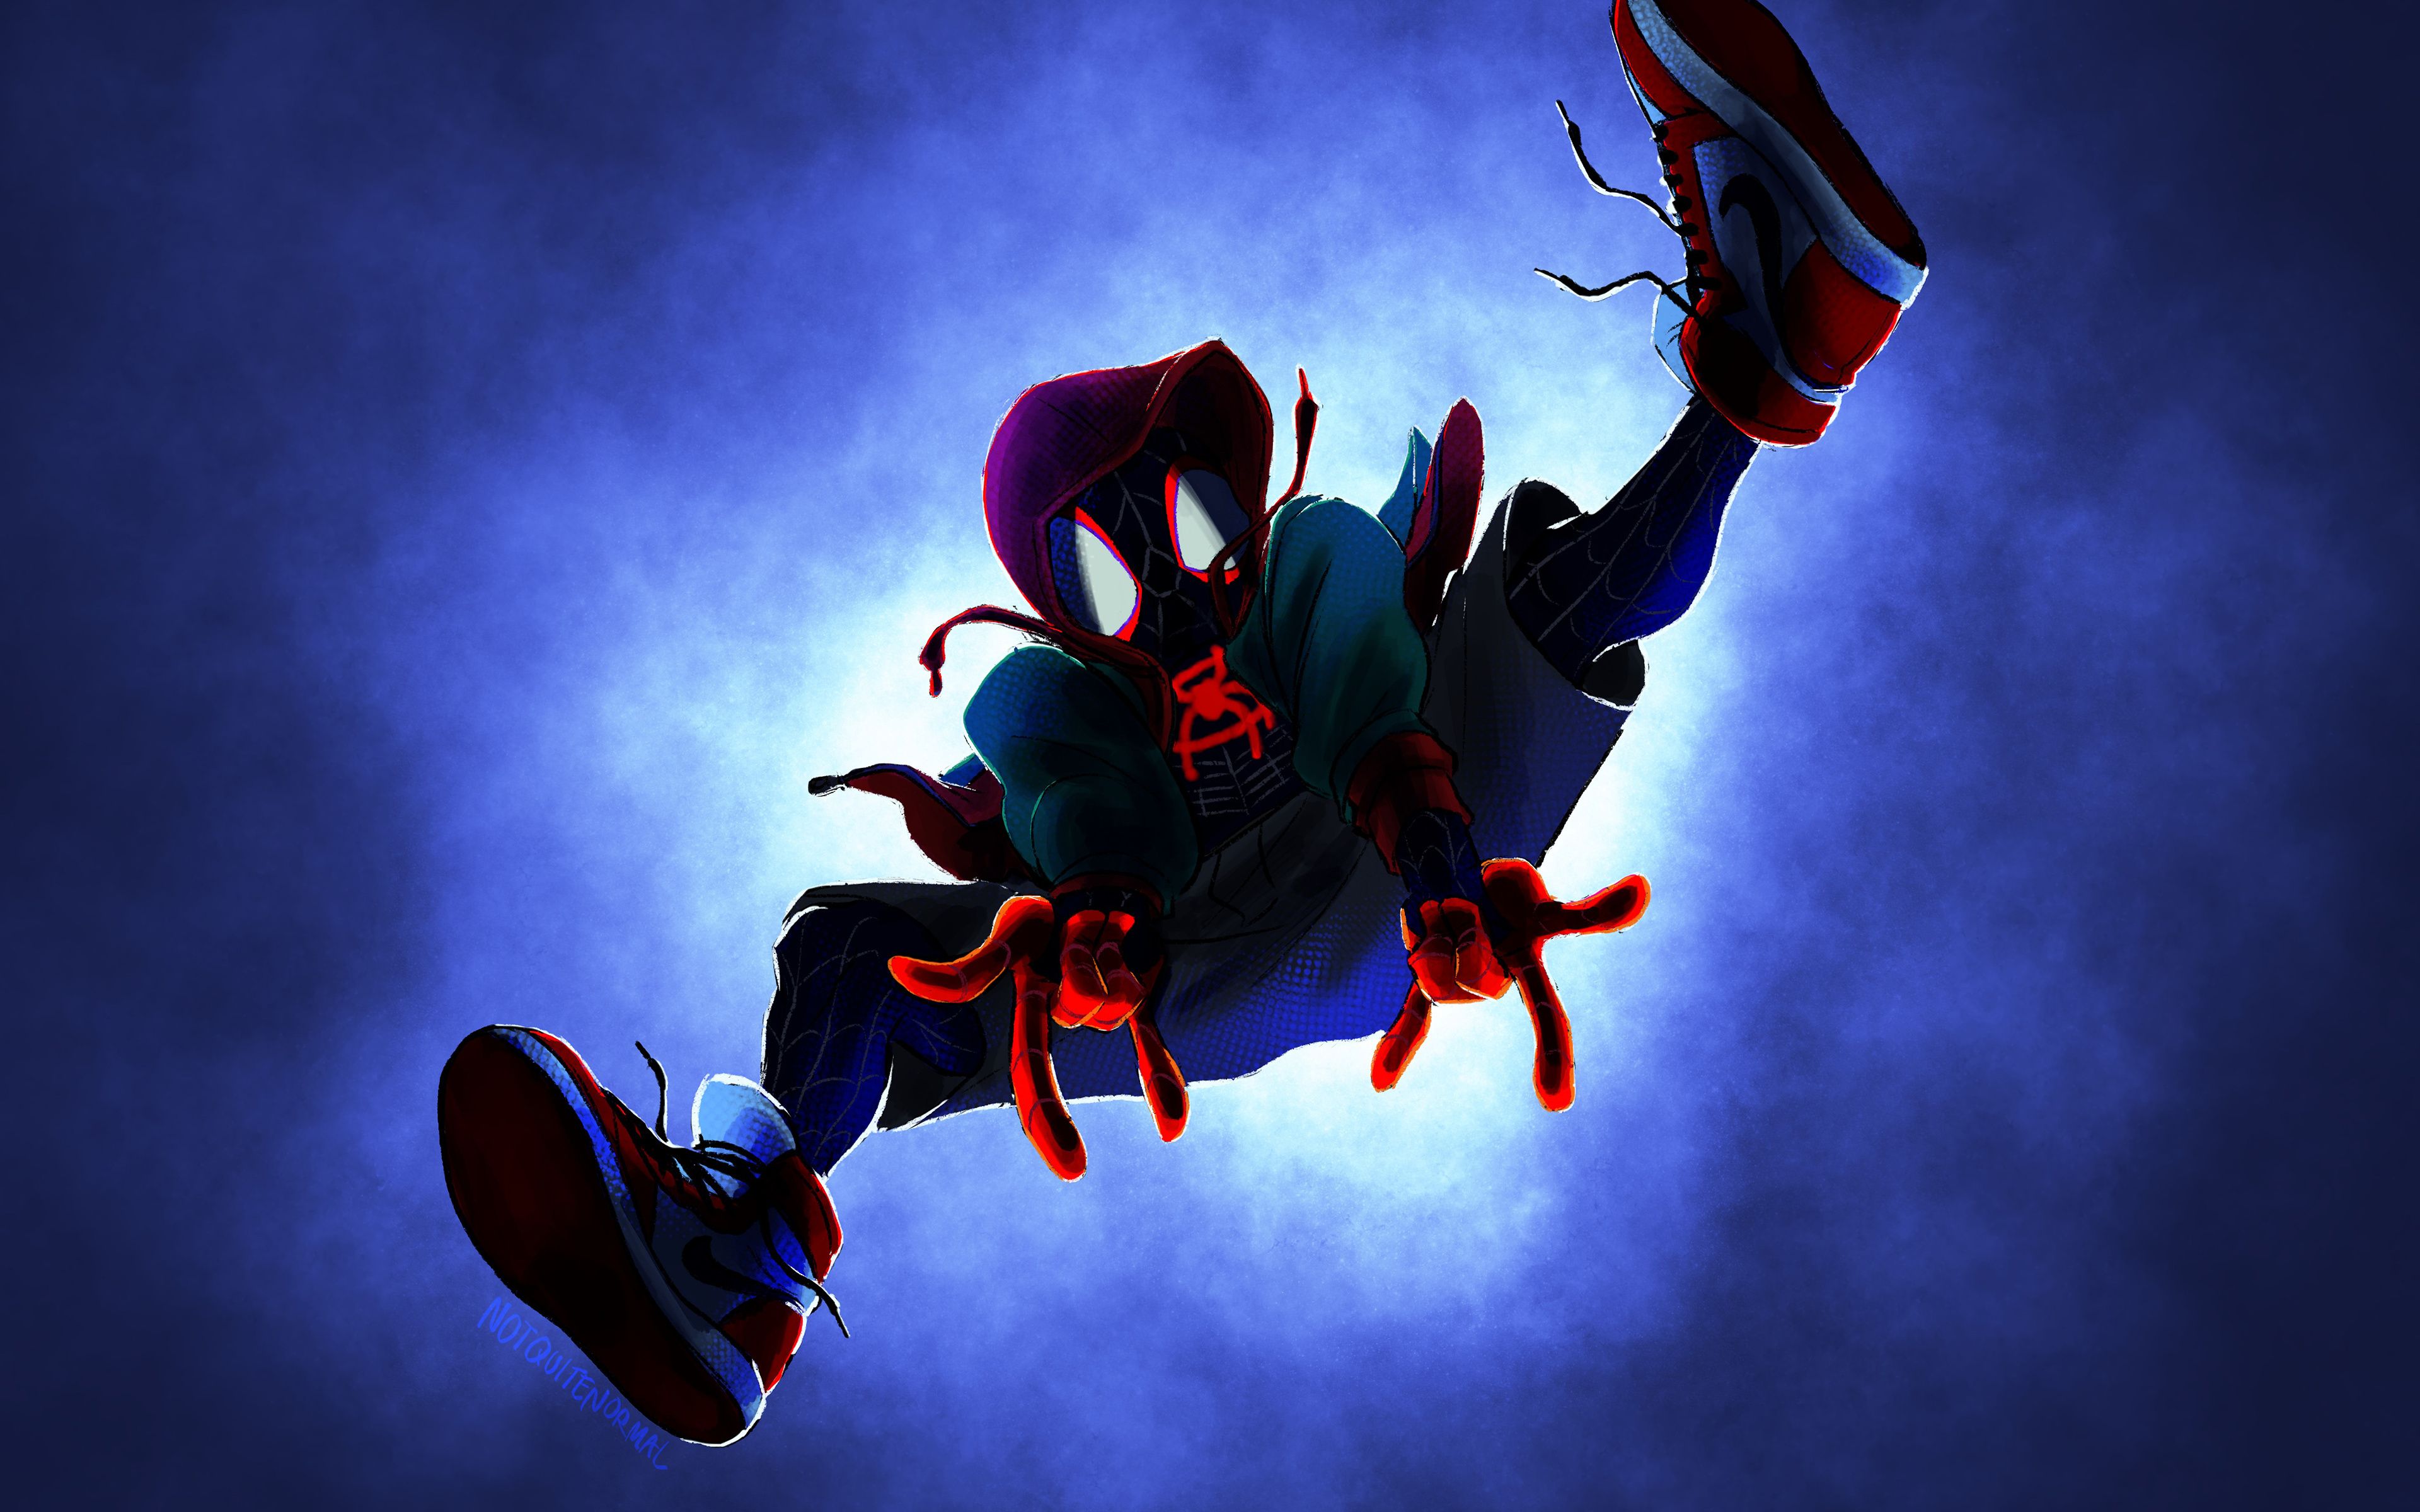 Download 3840x2400 Wallpaper Spider Man: Into The Spider Verse